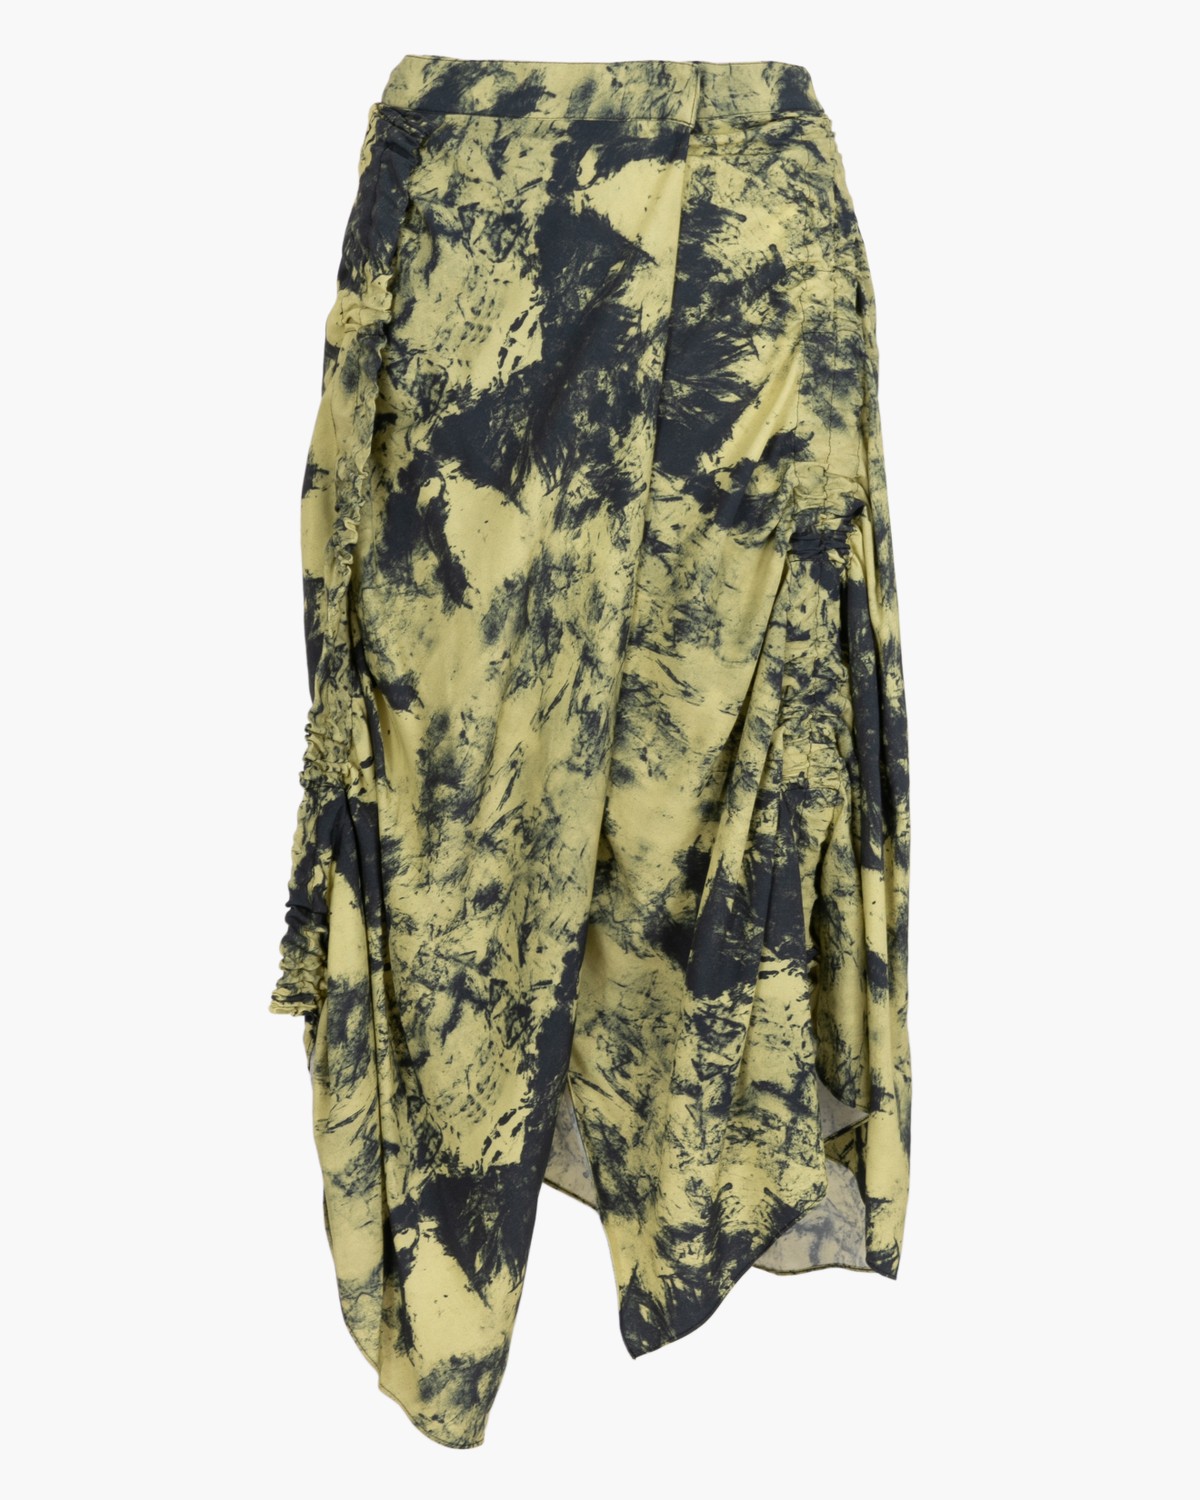 saia midi estampada com franzido | printed modal gathered skirt